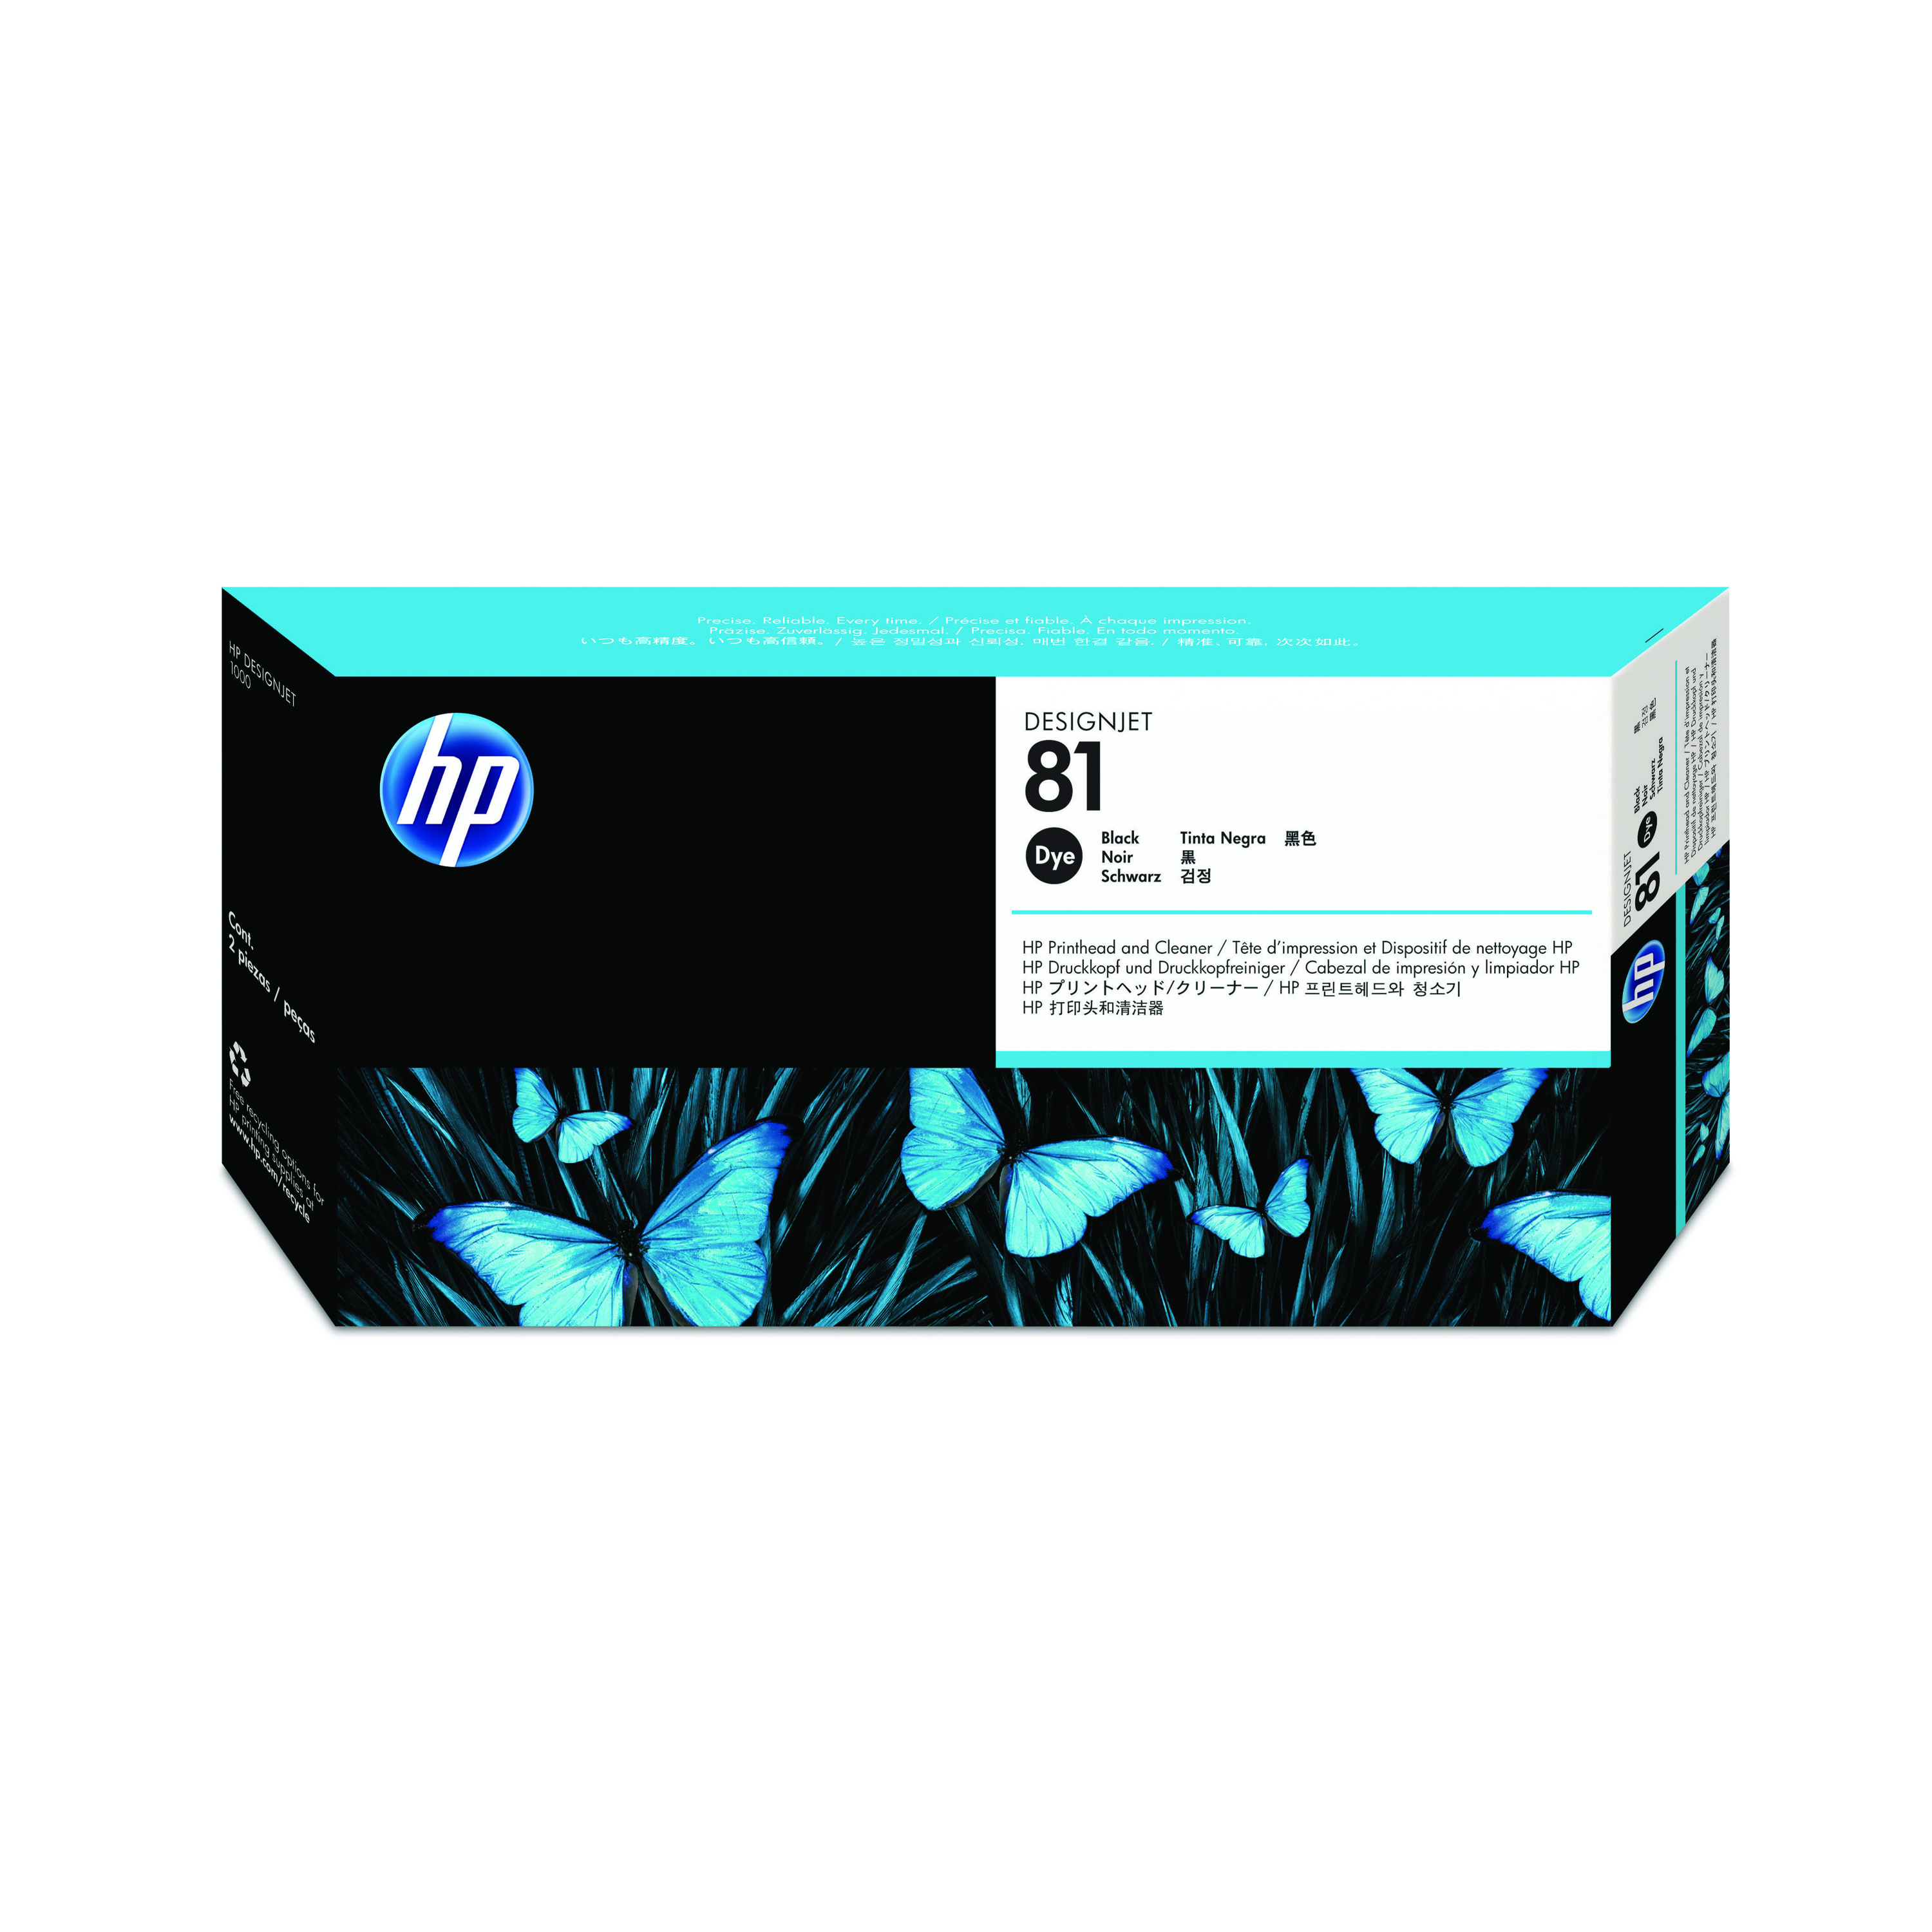 HP 81 Black Dye Printhead and Cleaner C4950A